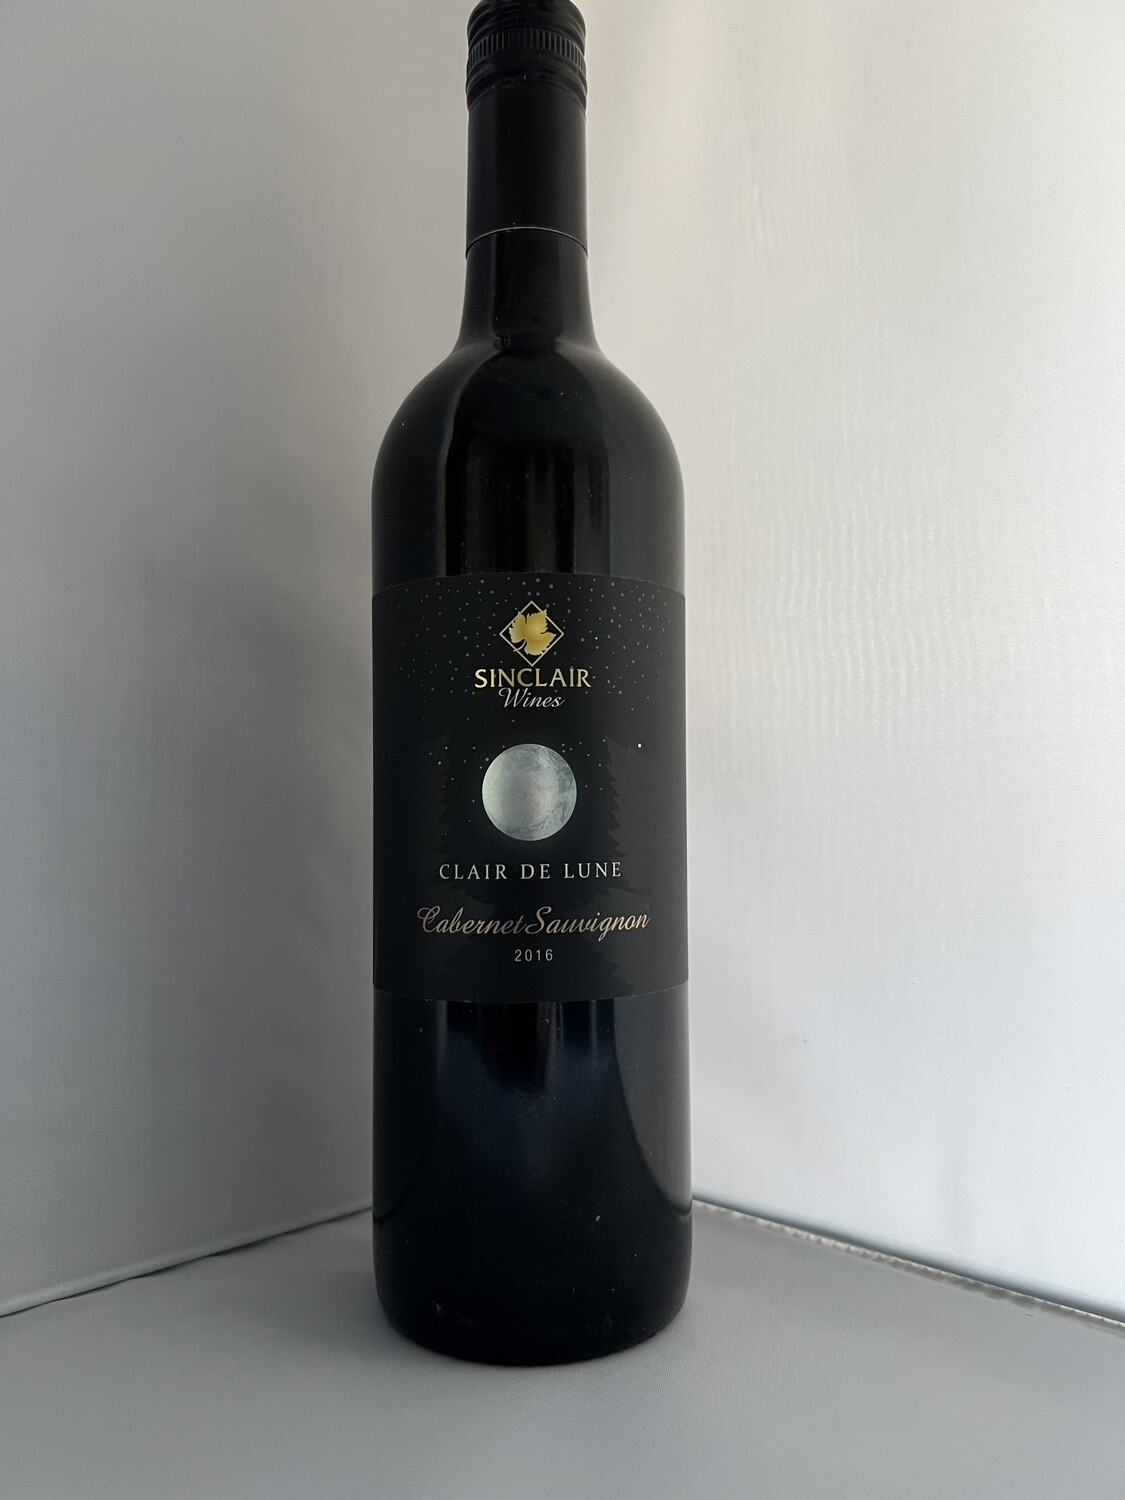 Sinclair Wines, Cabernet Sauvignon 2016